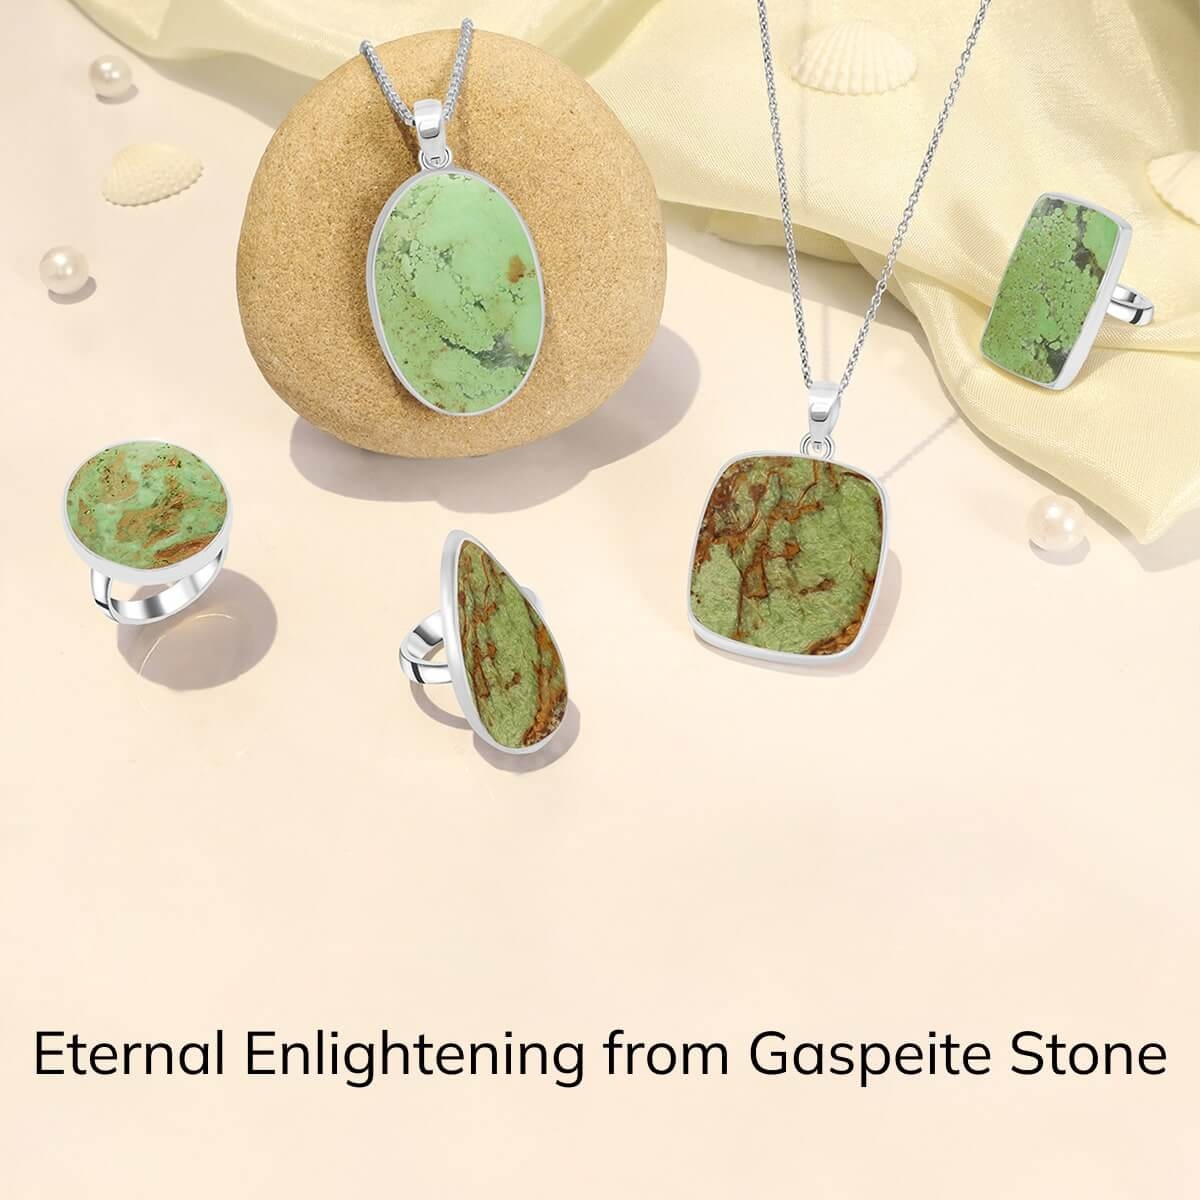 Spiritual Healing of Gaspeite Stone